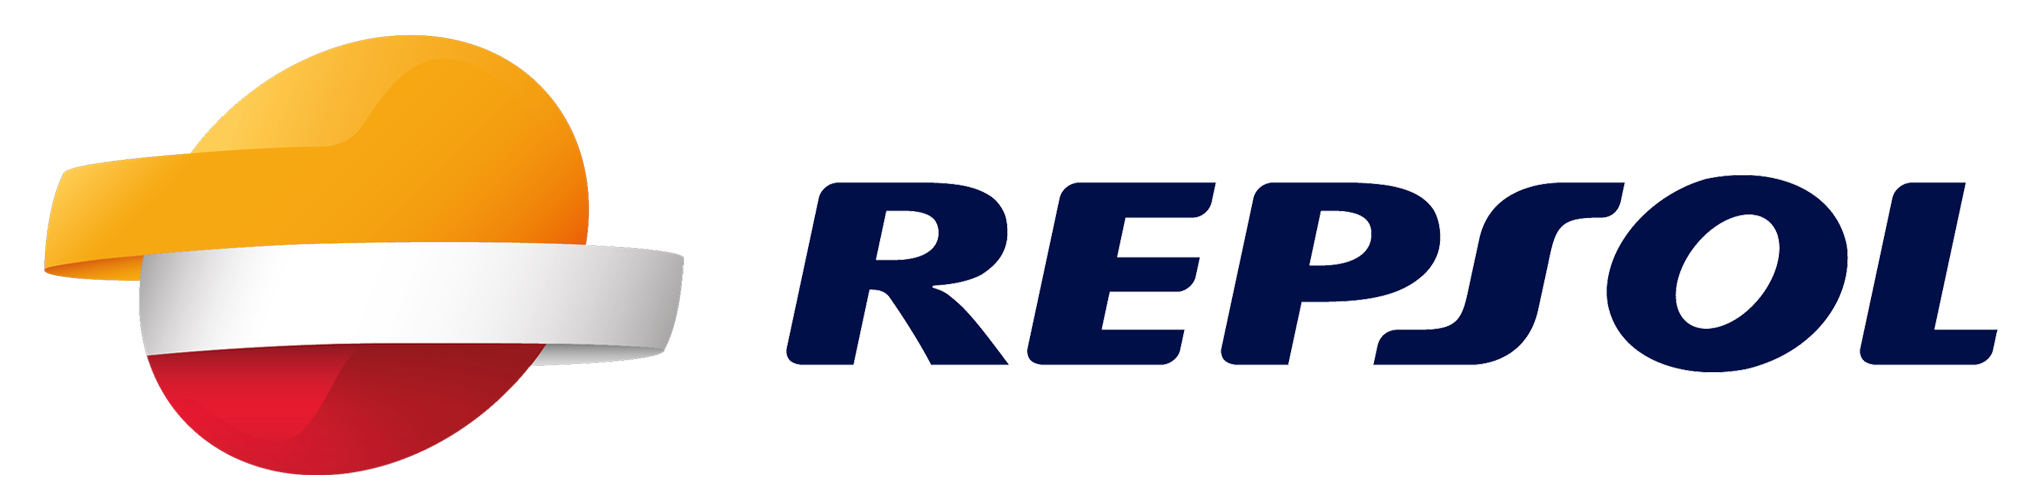 repsol_logo.